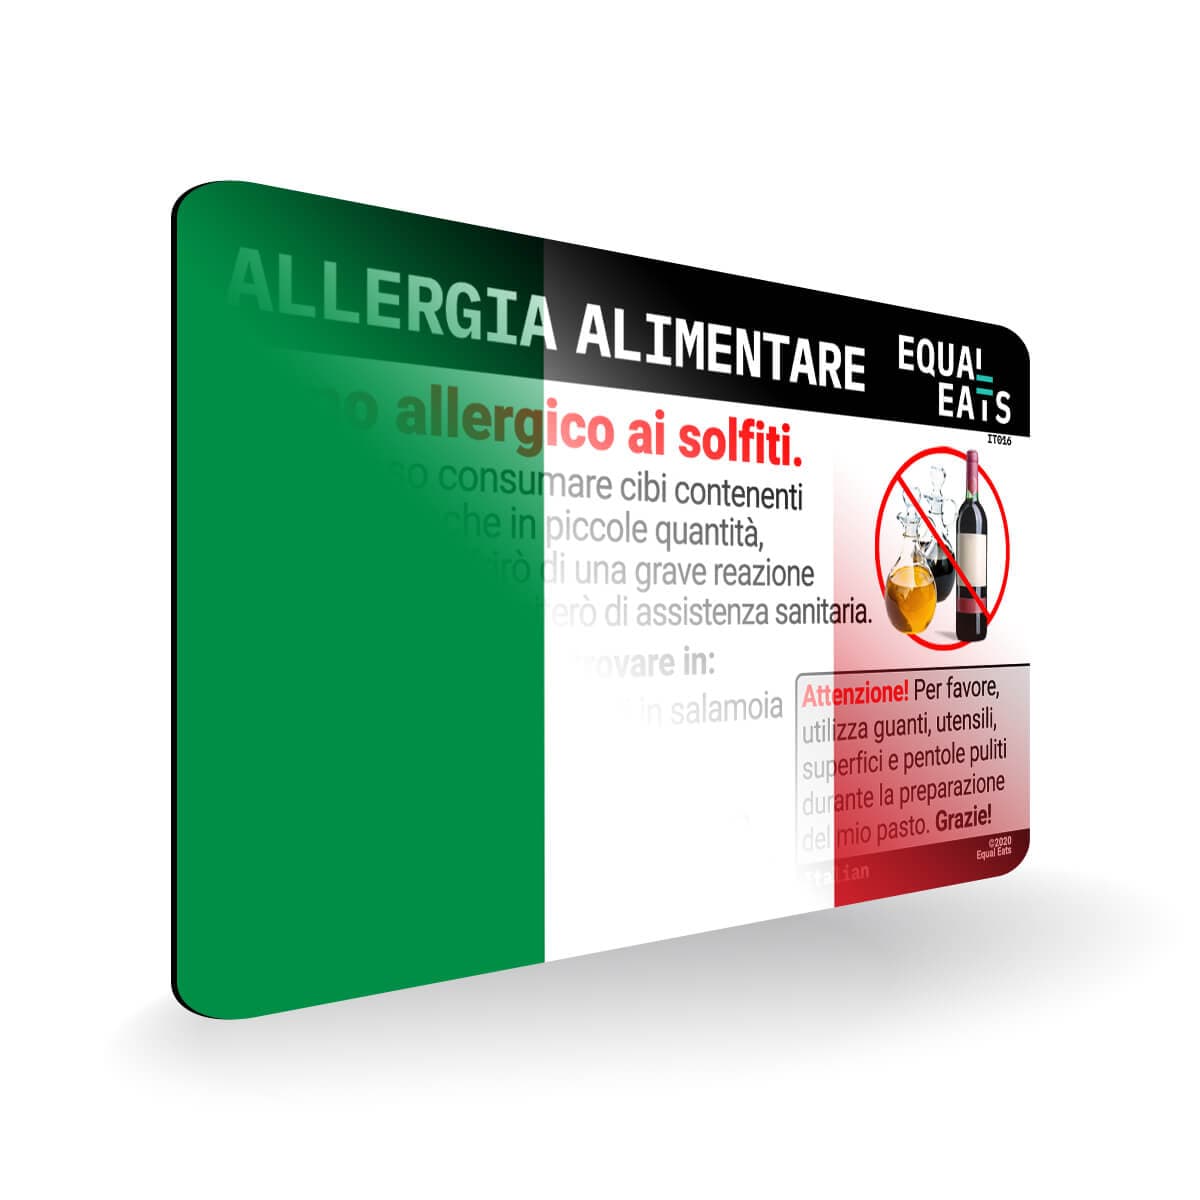 Sulfite Allergy in Italian. Sulfite Allergy Card for Italy